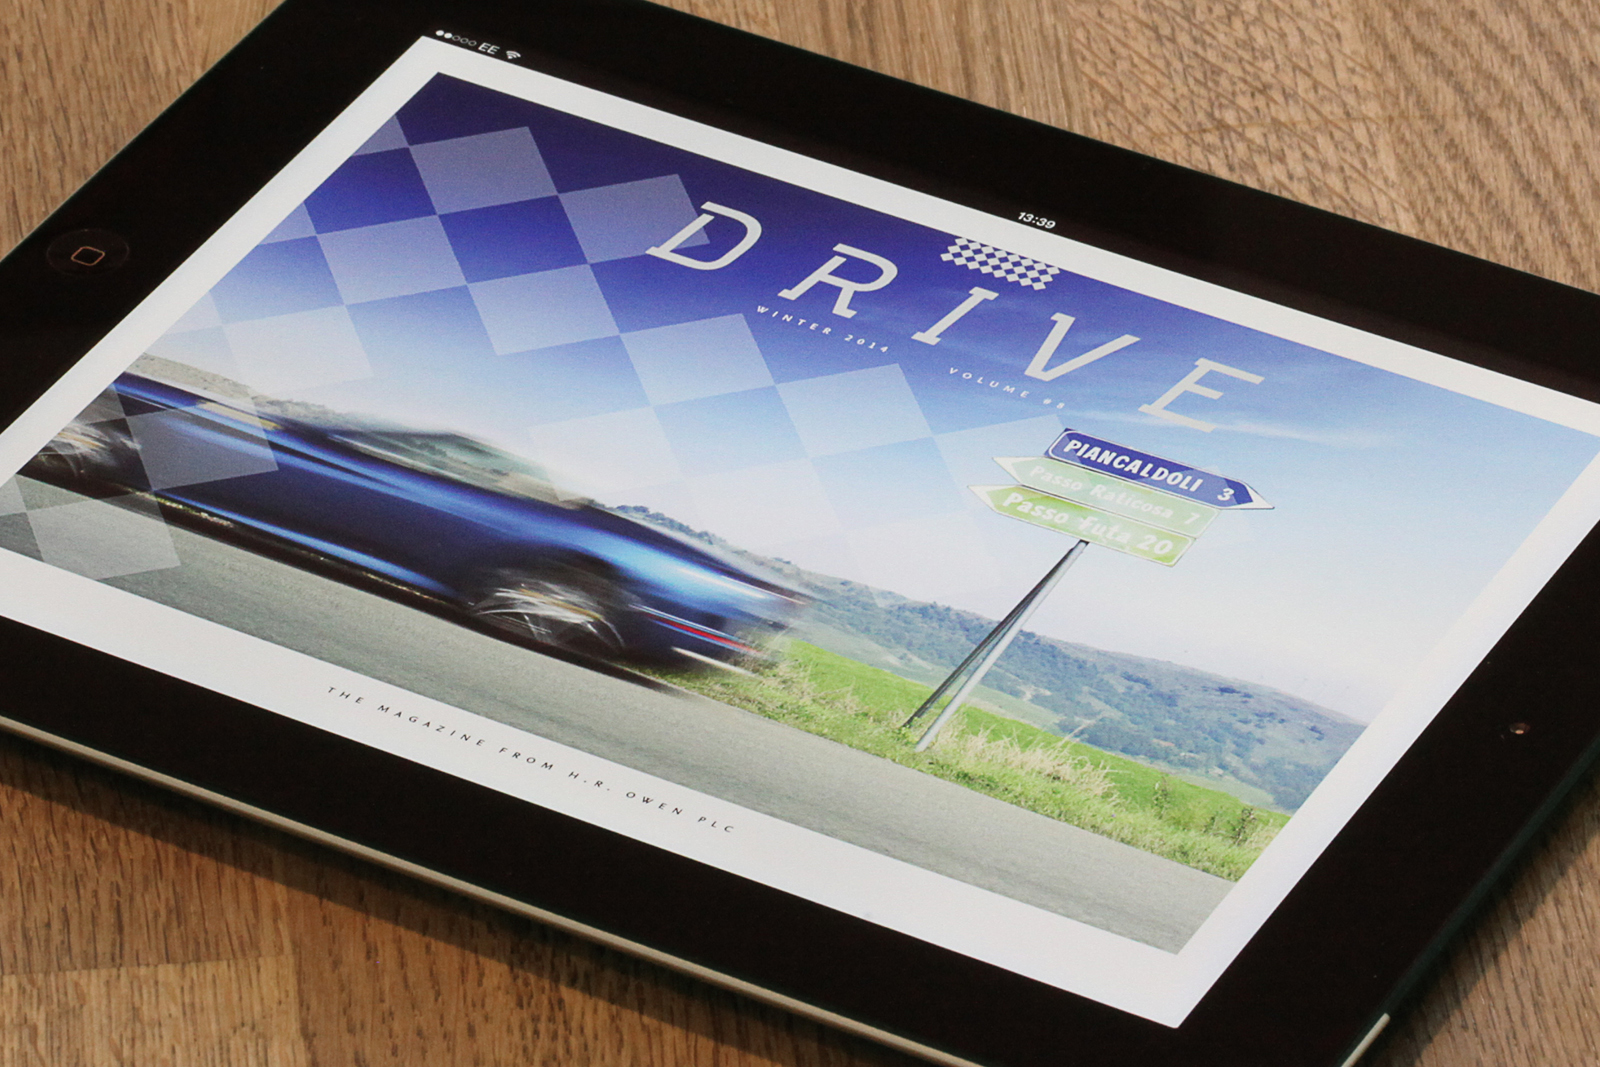 H.R. Owen Drive iPad app